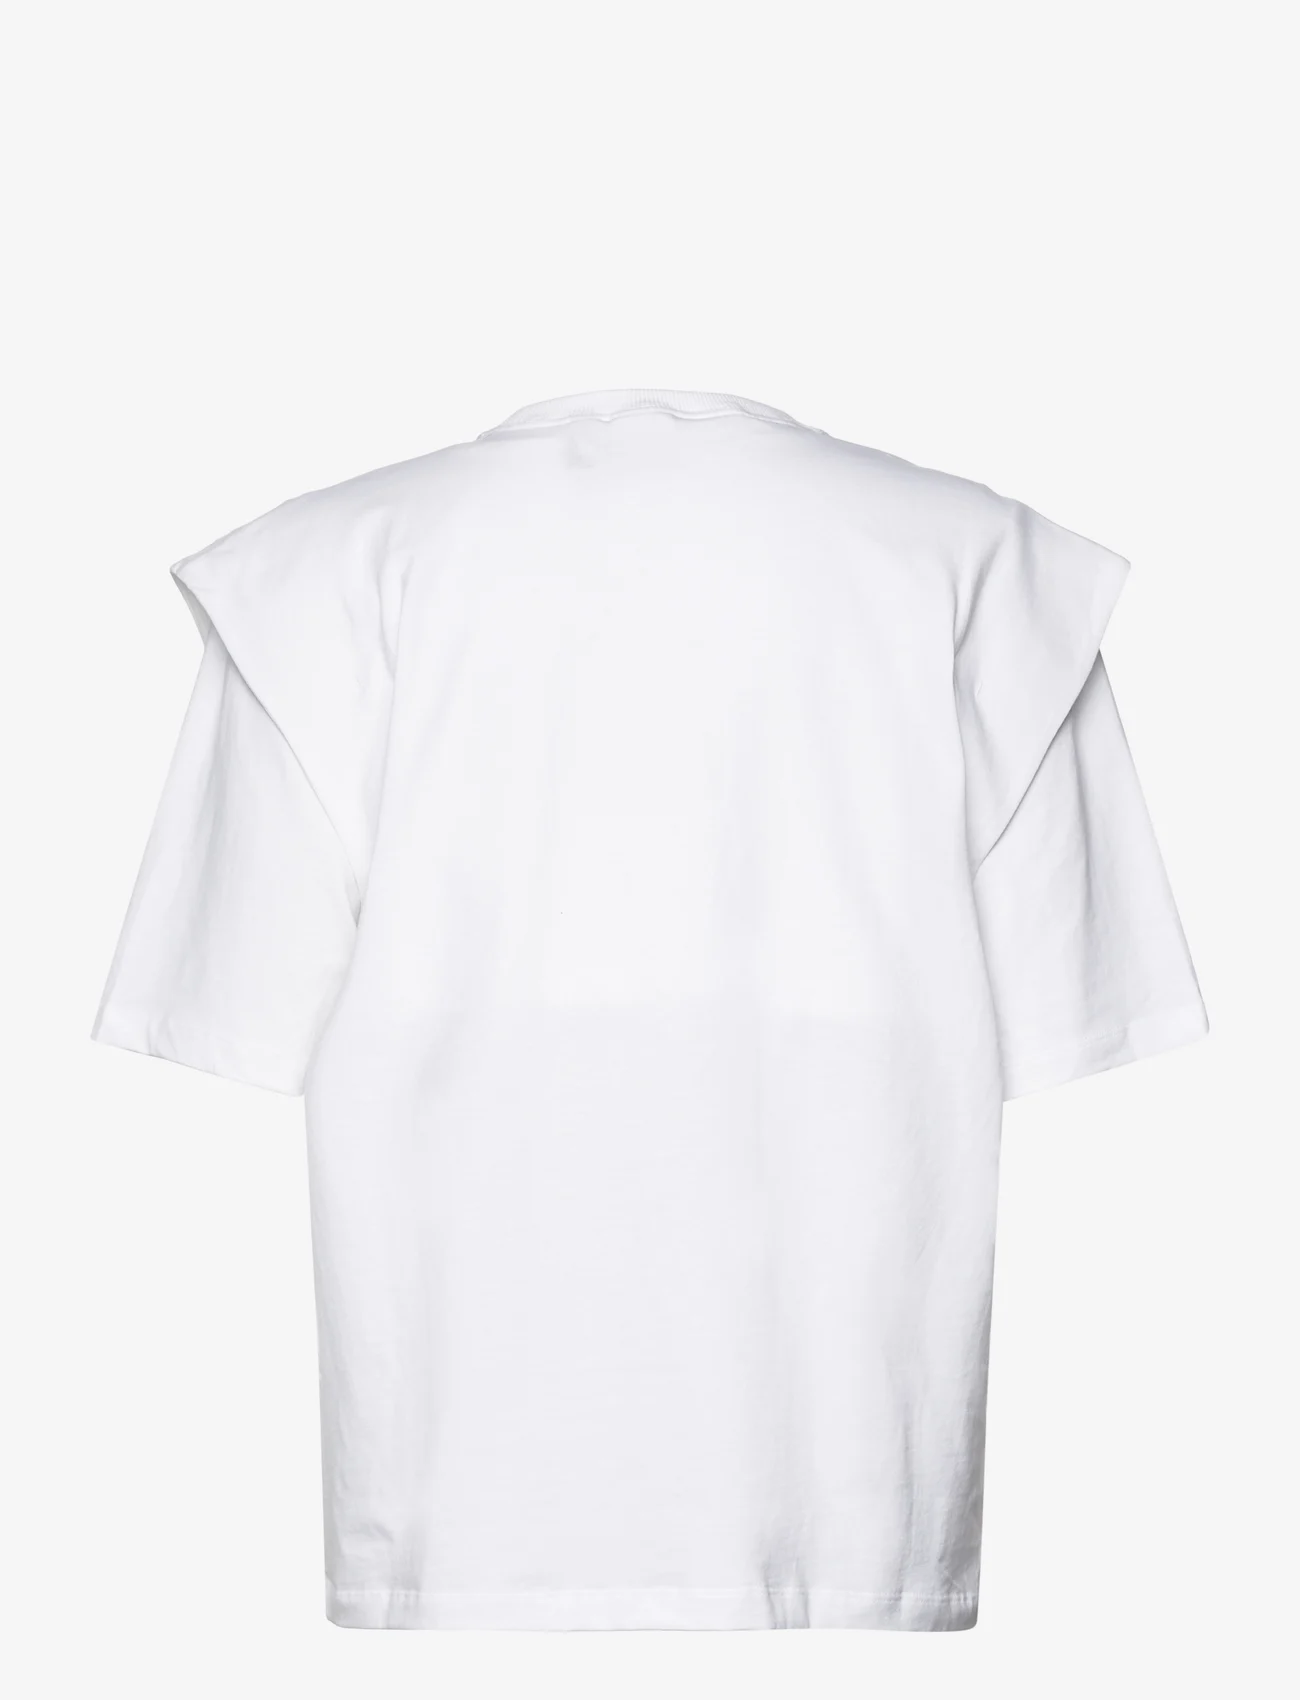 adidas Originals - Always Original T-Shirt - t-shirts - white - 1